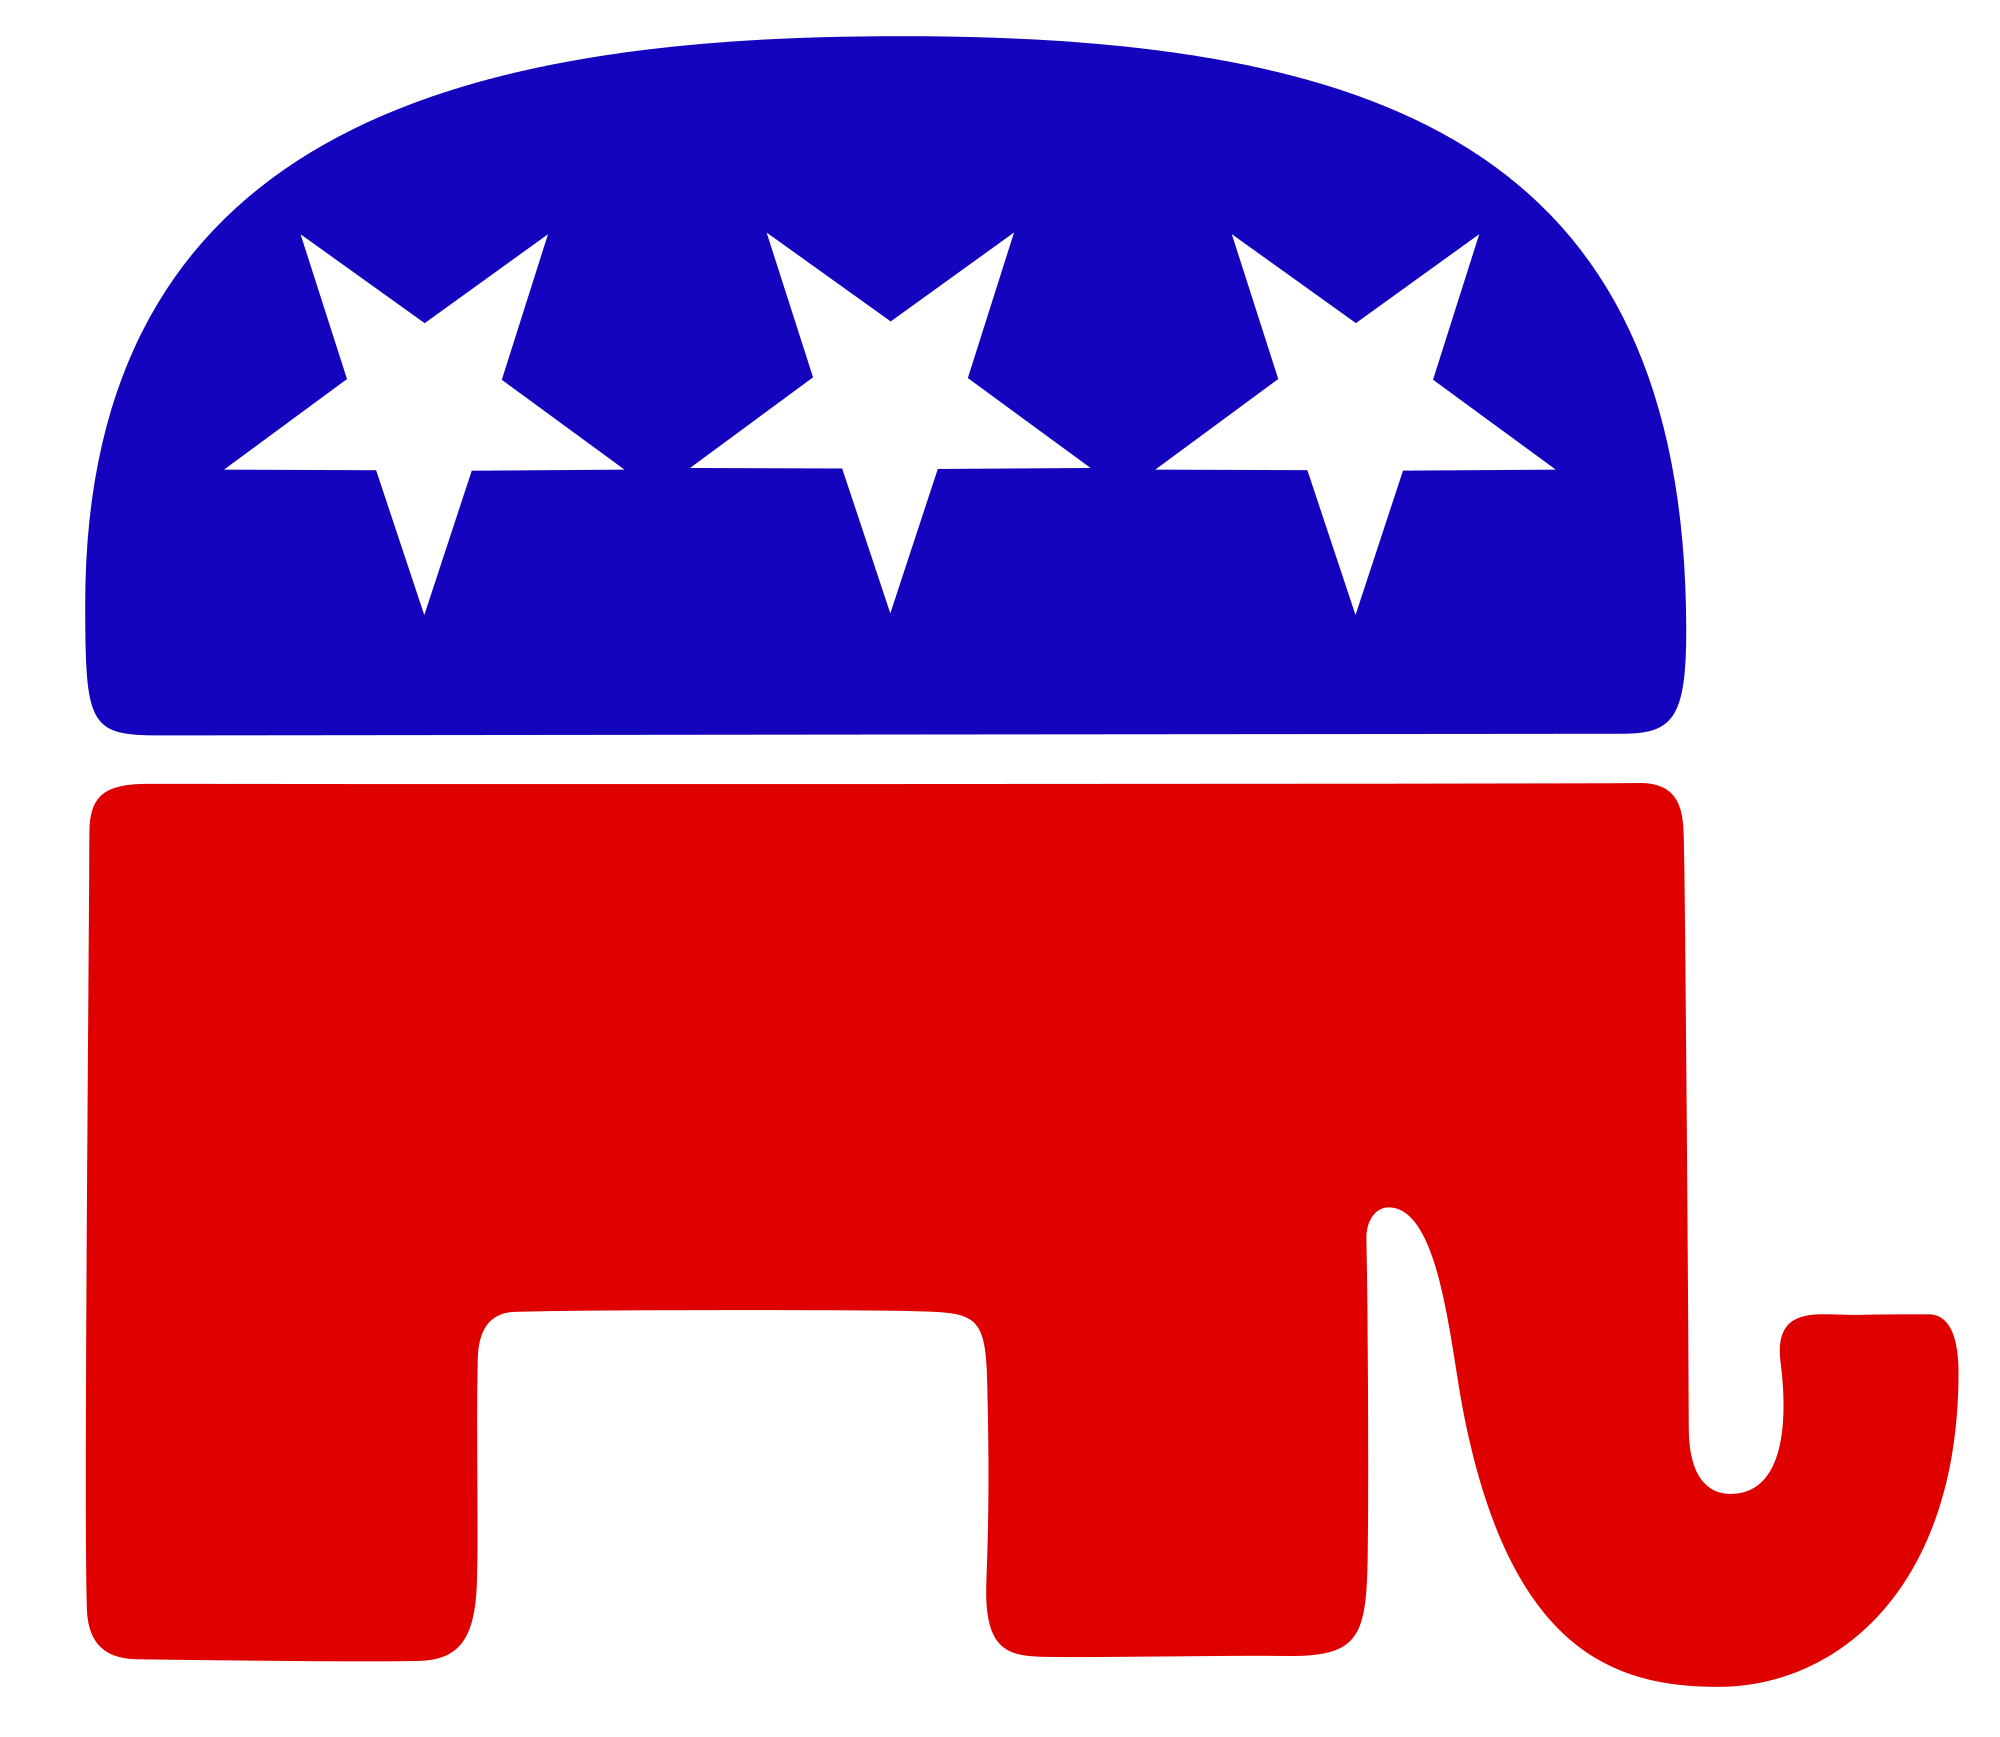 Republican Party Forms